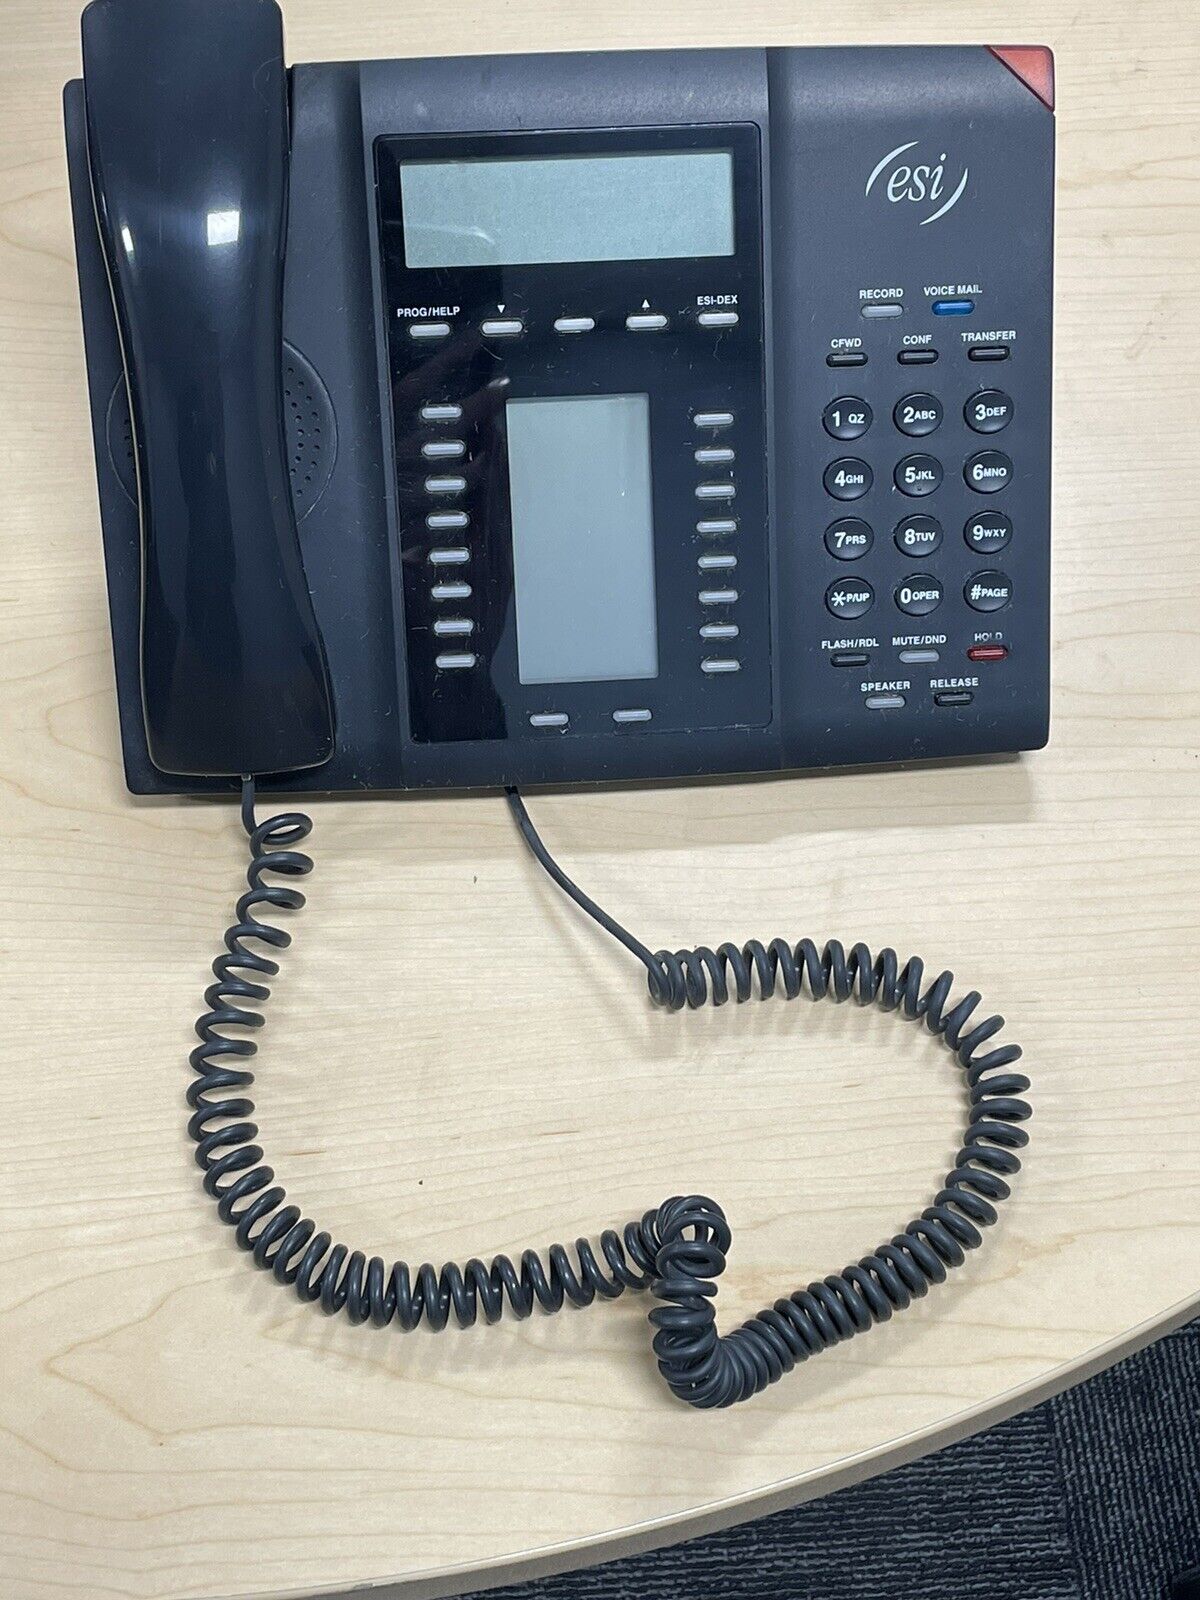 ESI 60D 5000-0594 Digital Phone - Black -Working/Tested